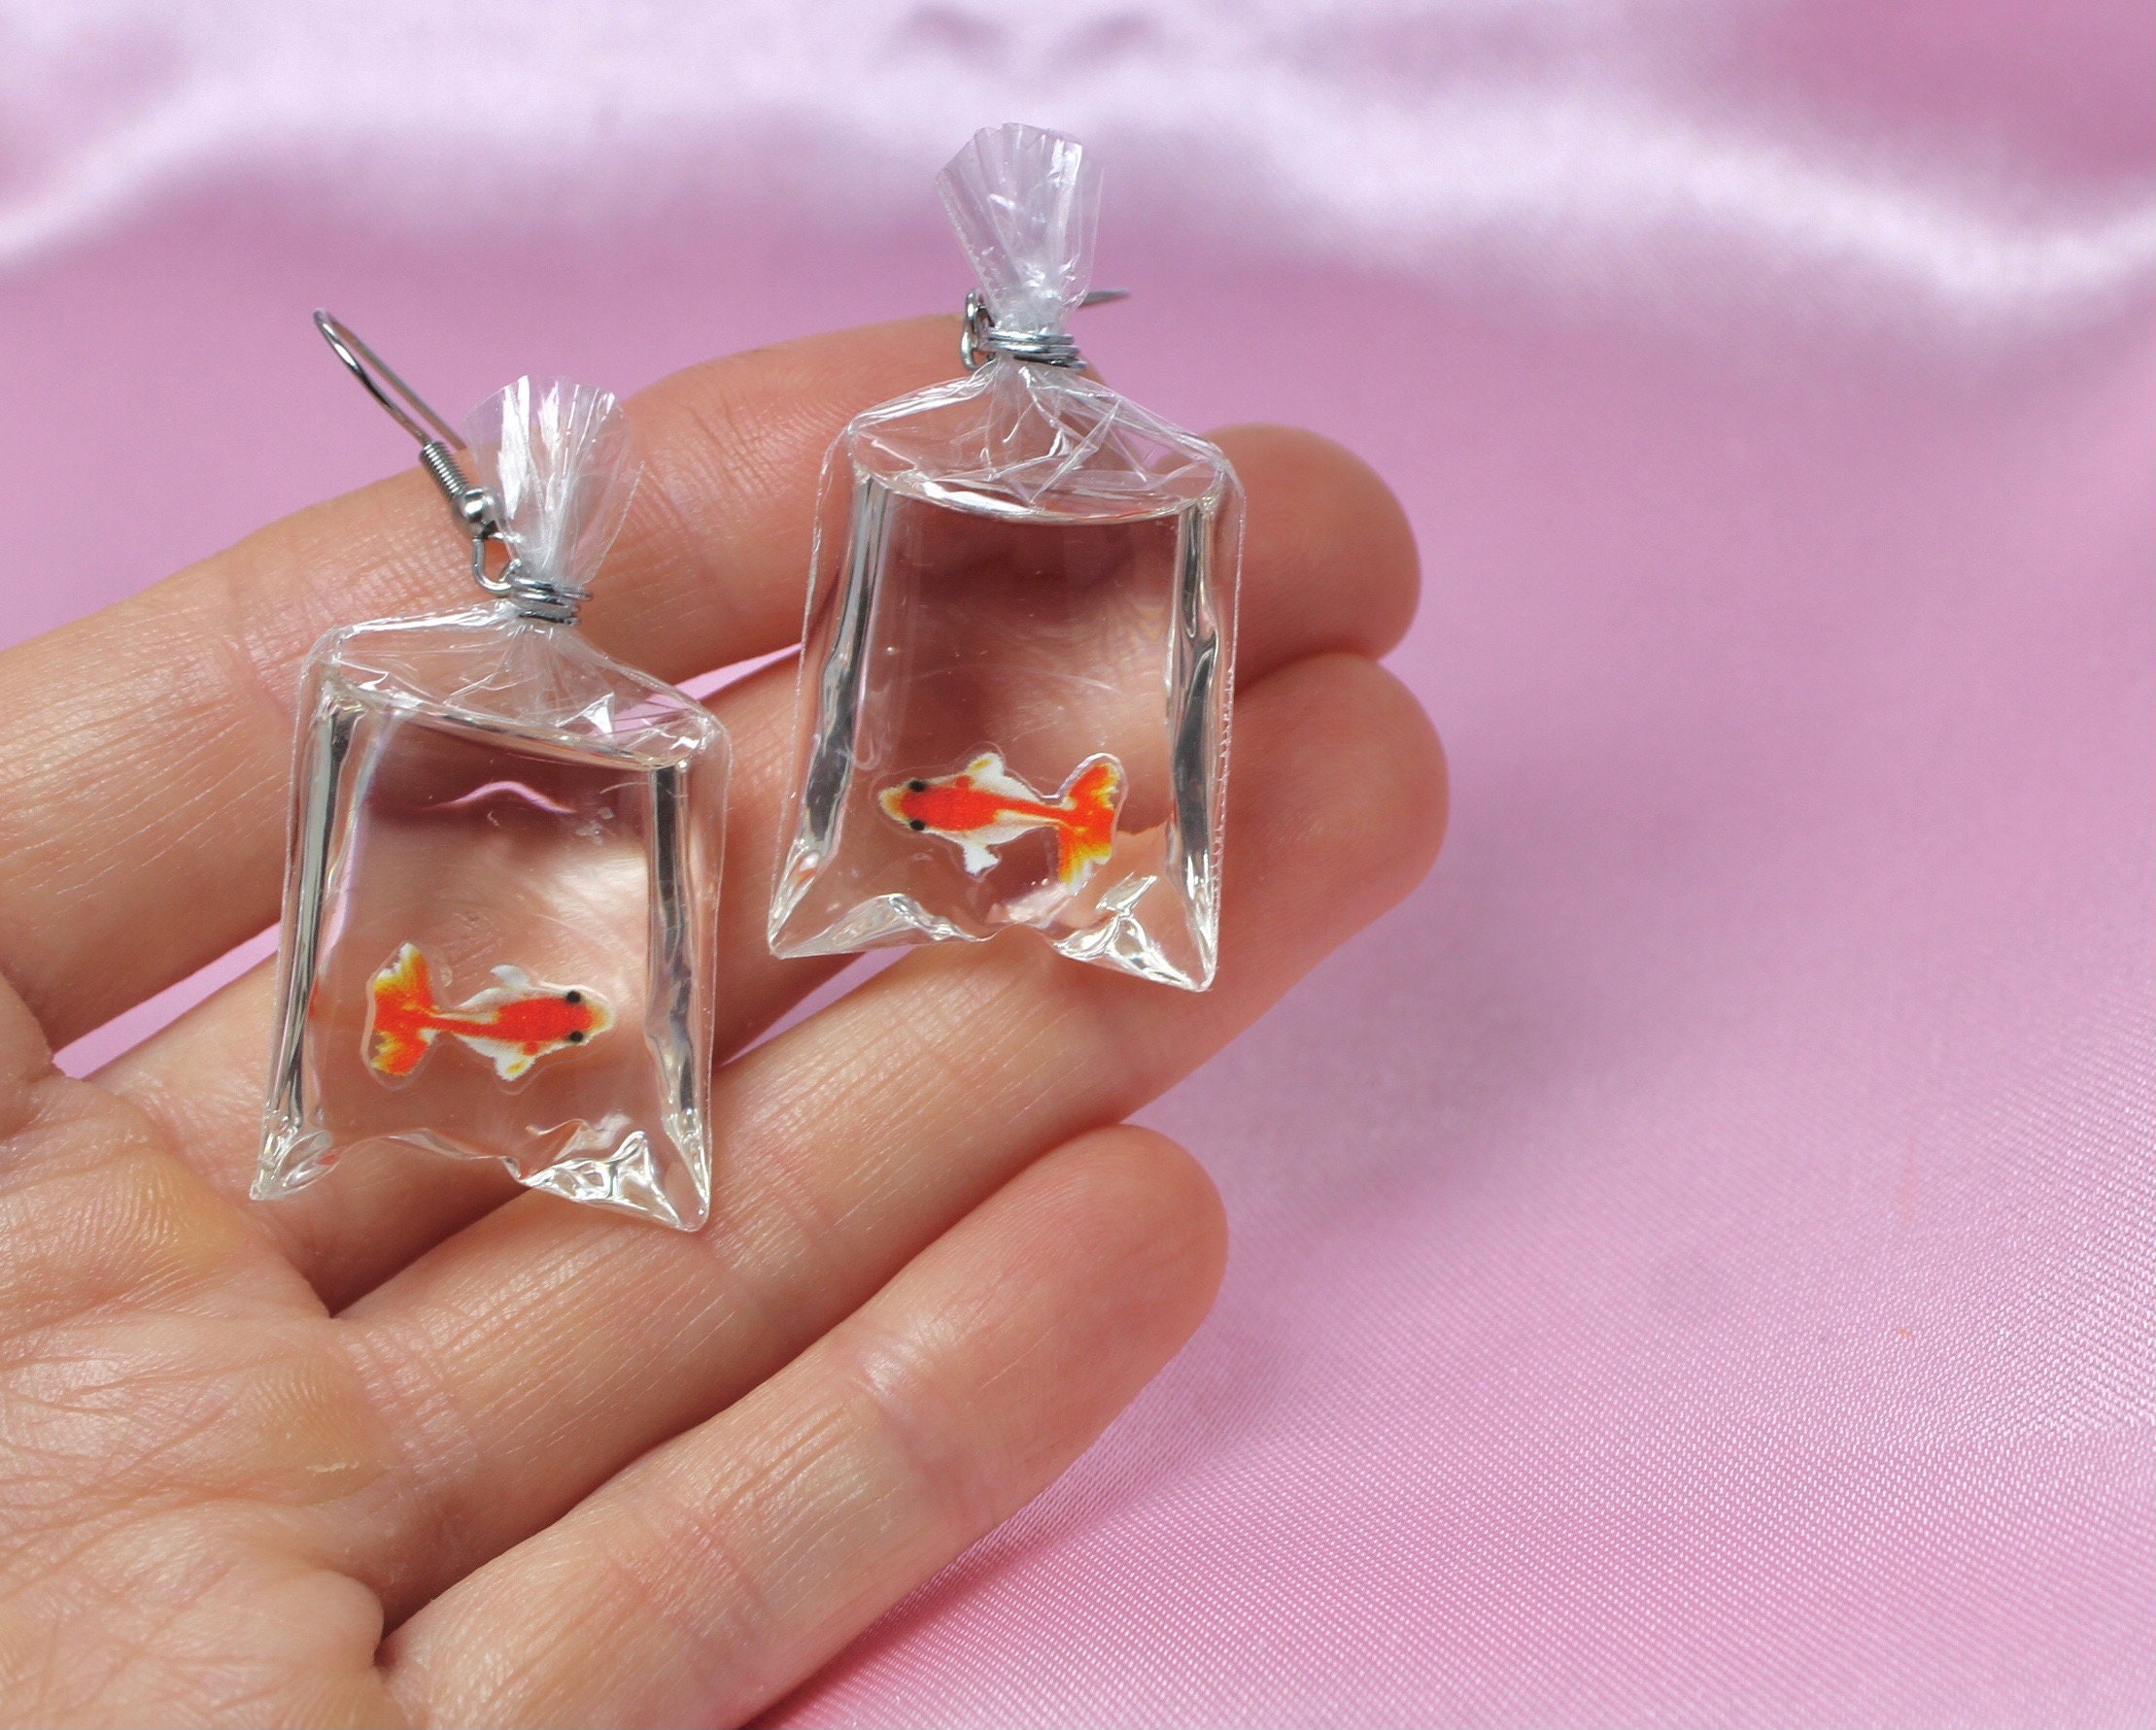 Details more than 65 goldfish bag earrings best